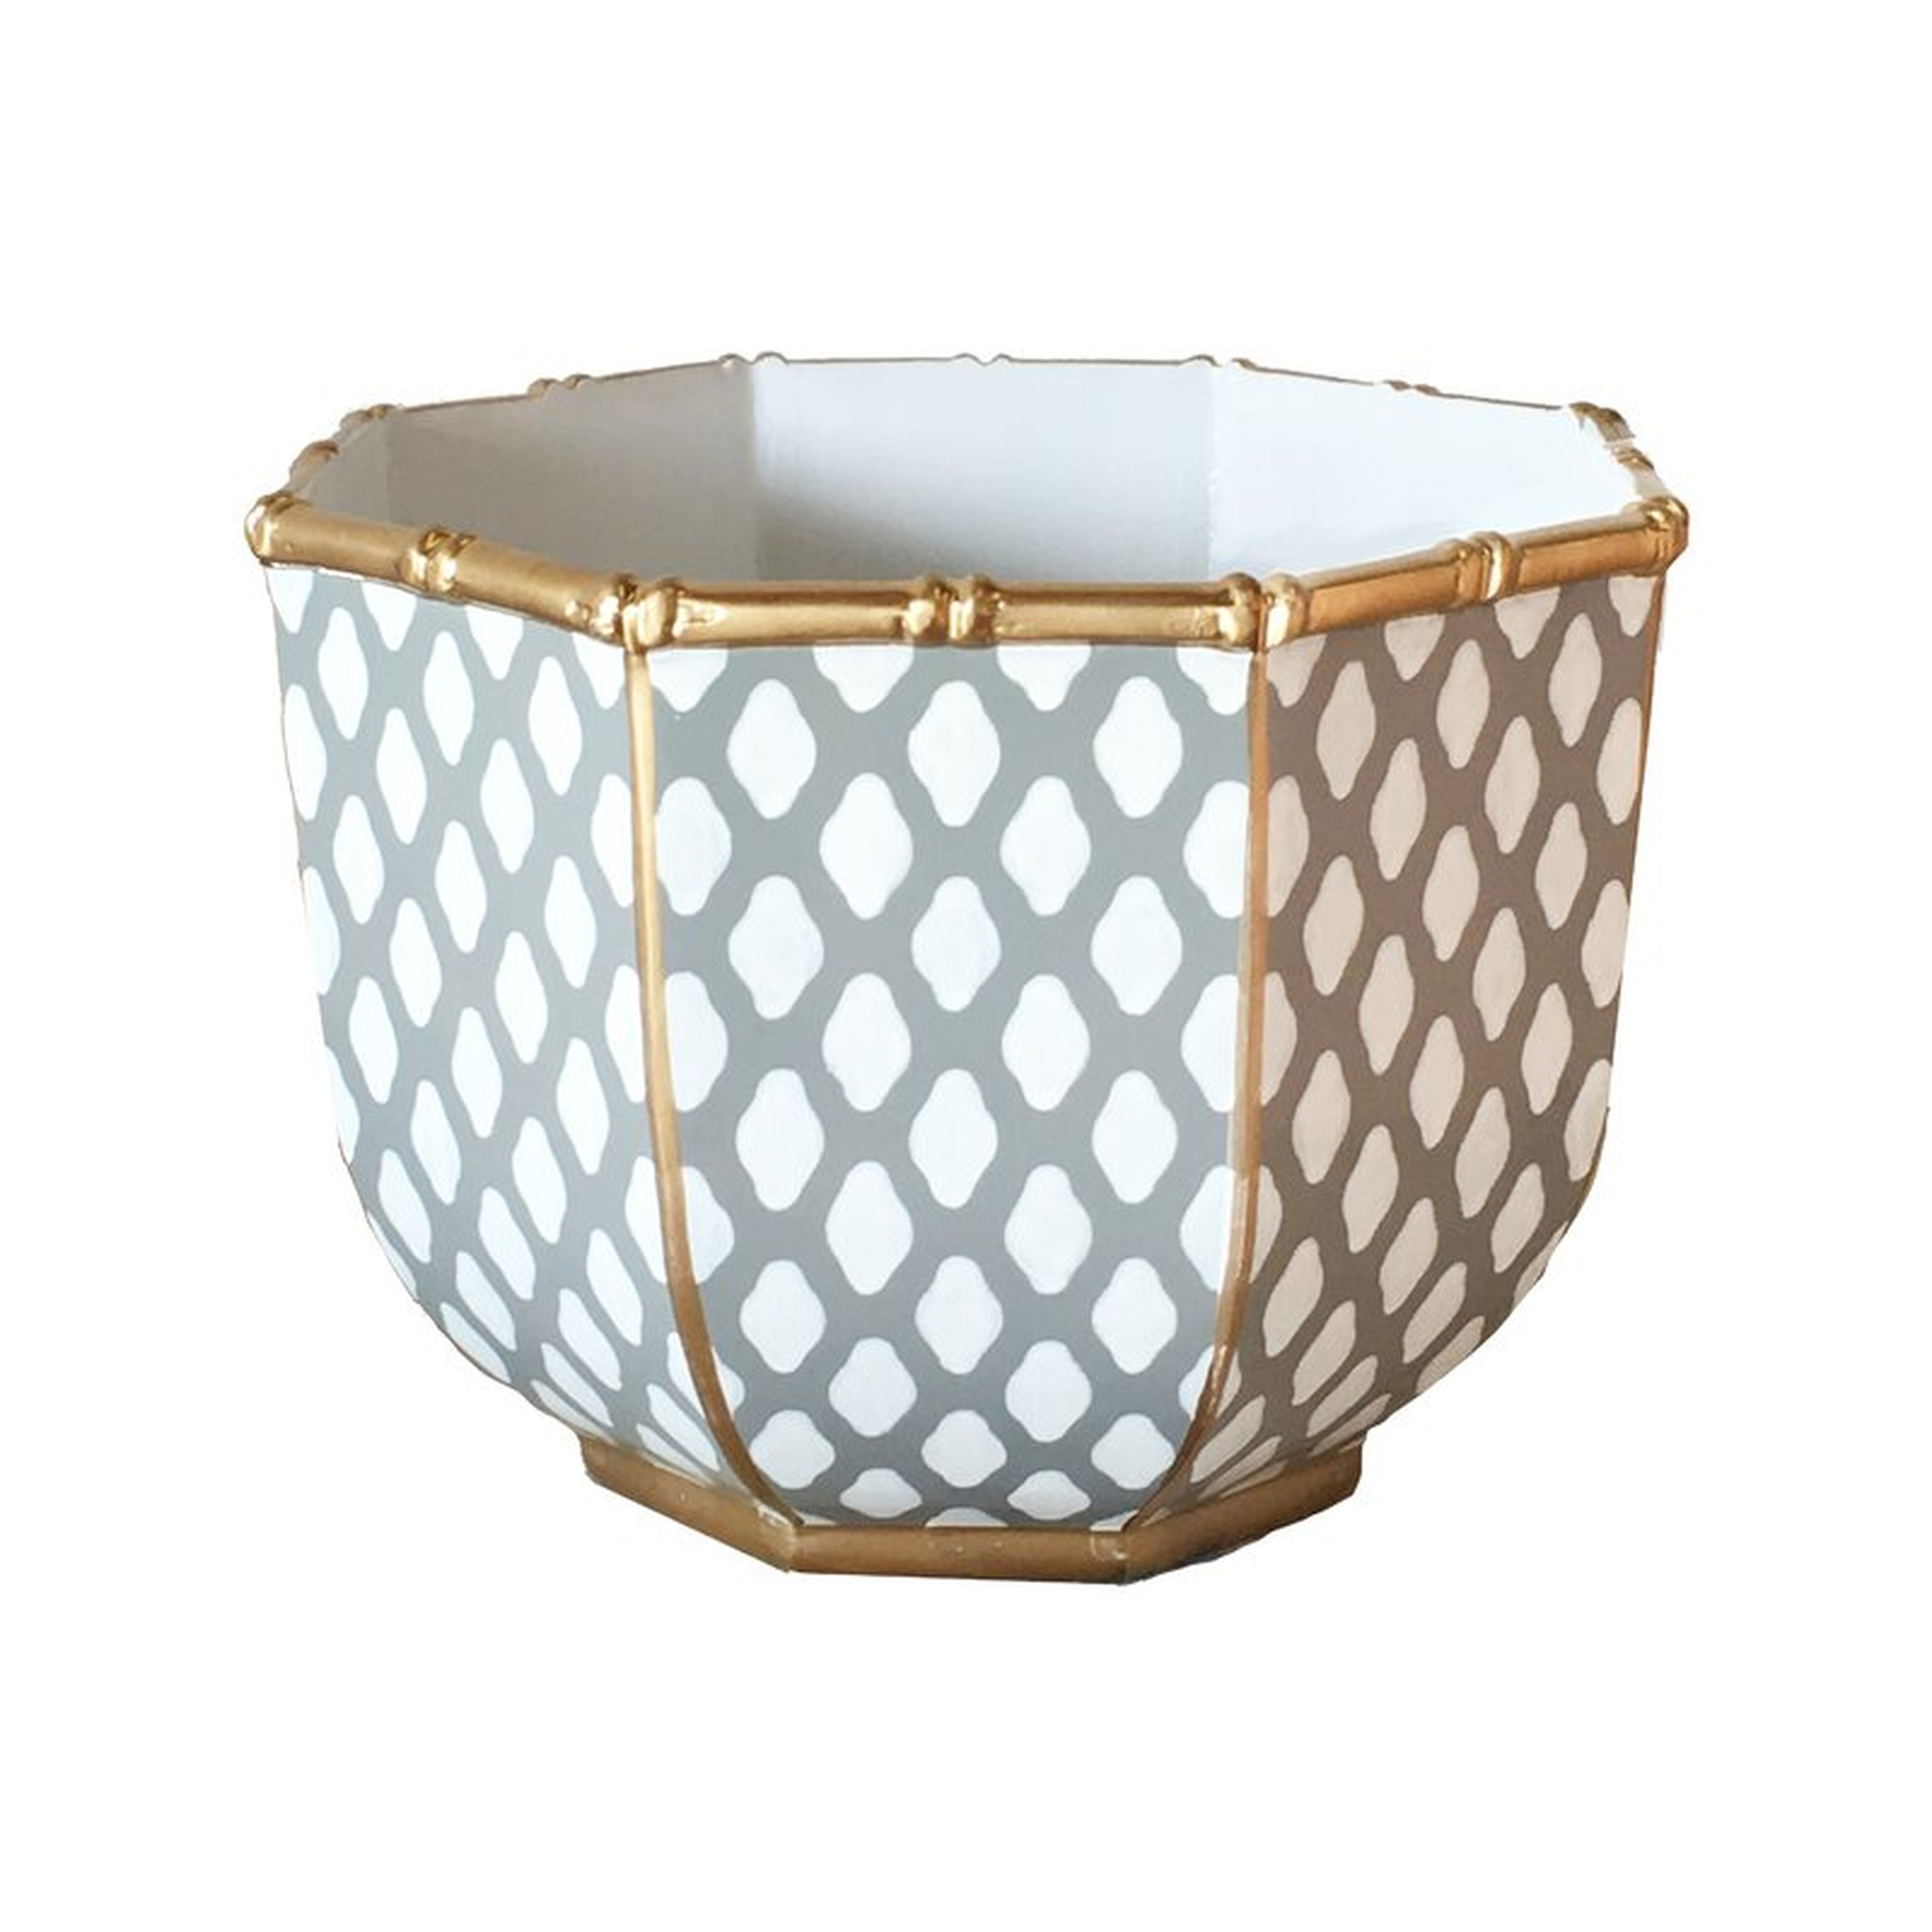 Dana Gibson Inc. Bamboo Metal Decorative Bowl Size: 8" H x 11" W x 11" D, Color: Parsi Gray - Perigold